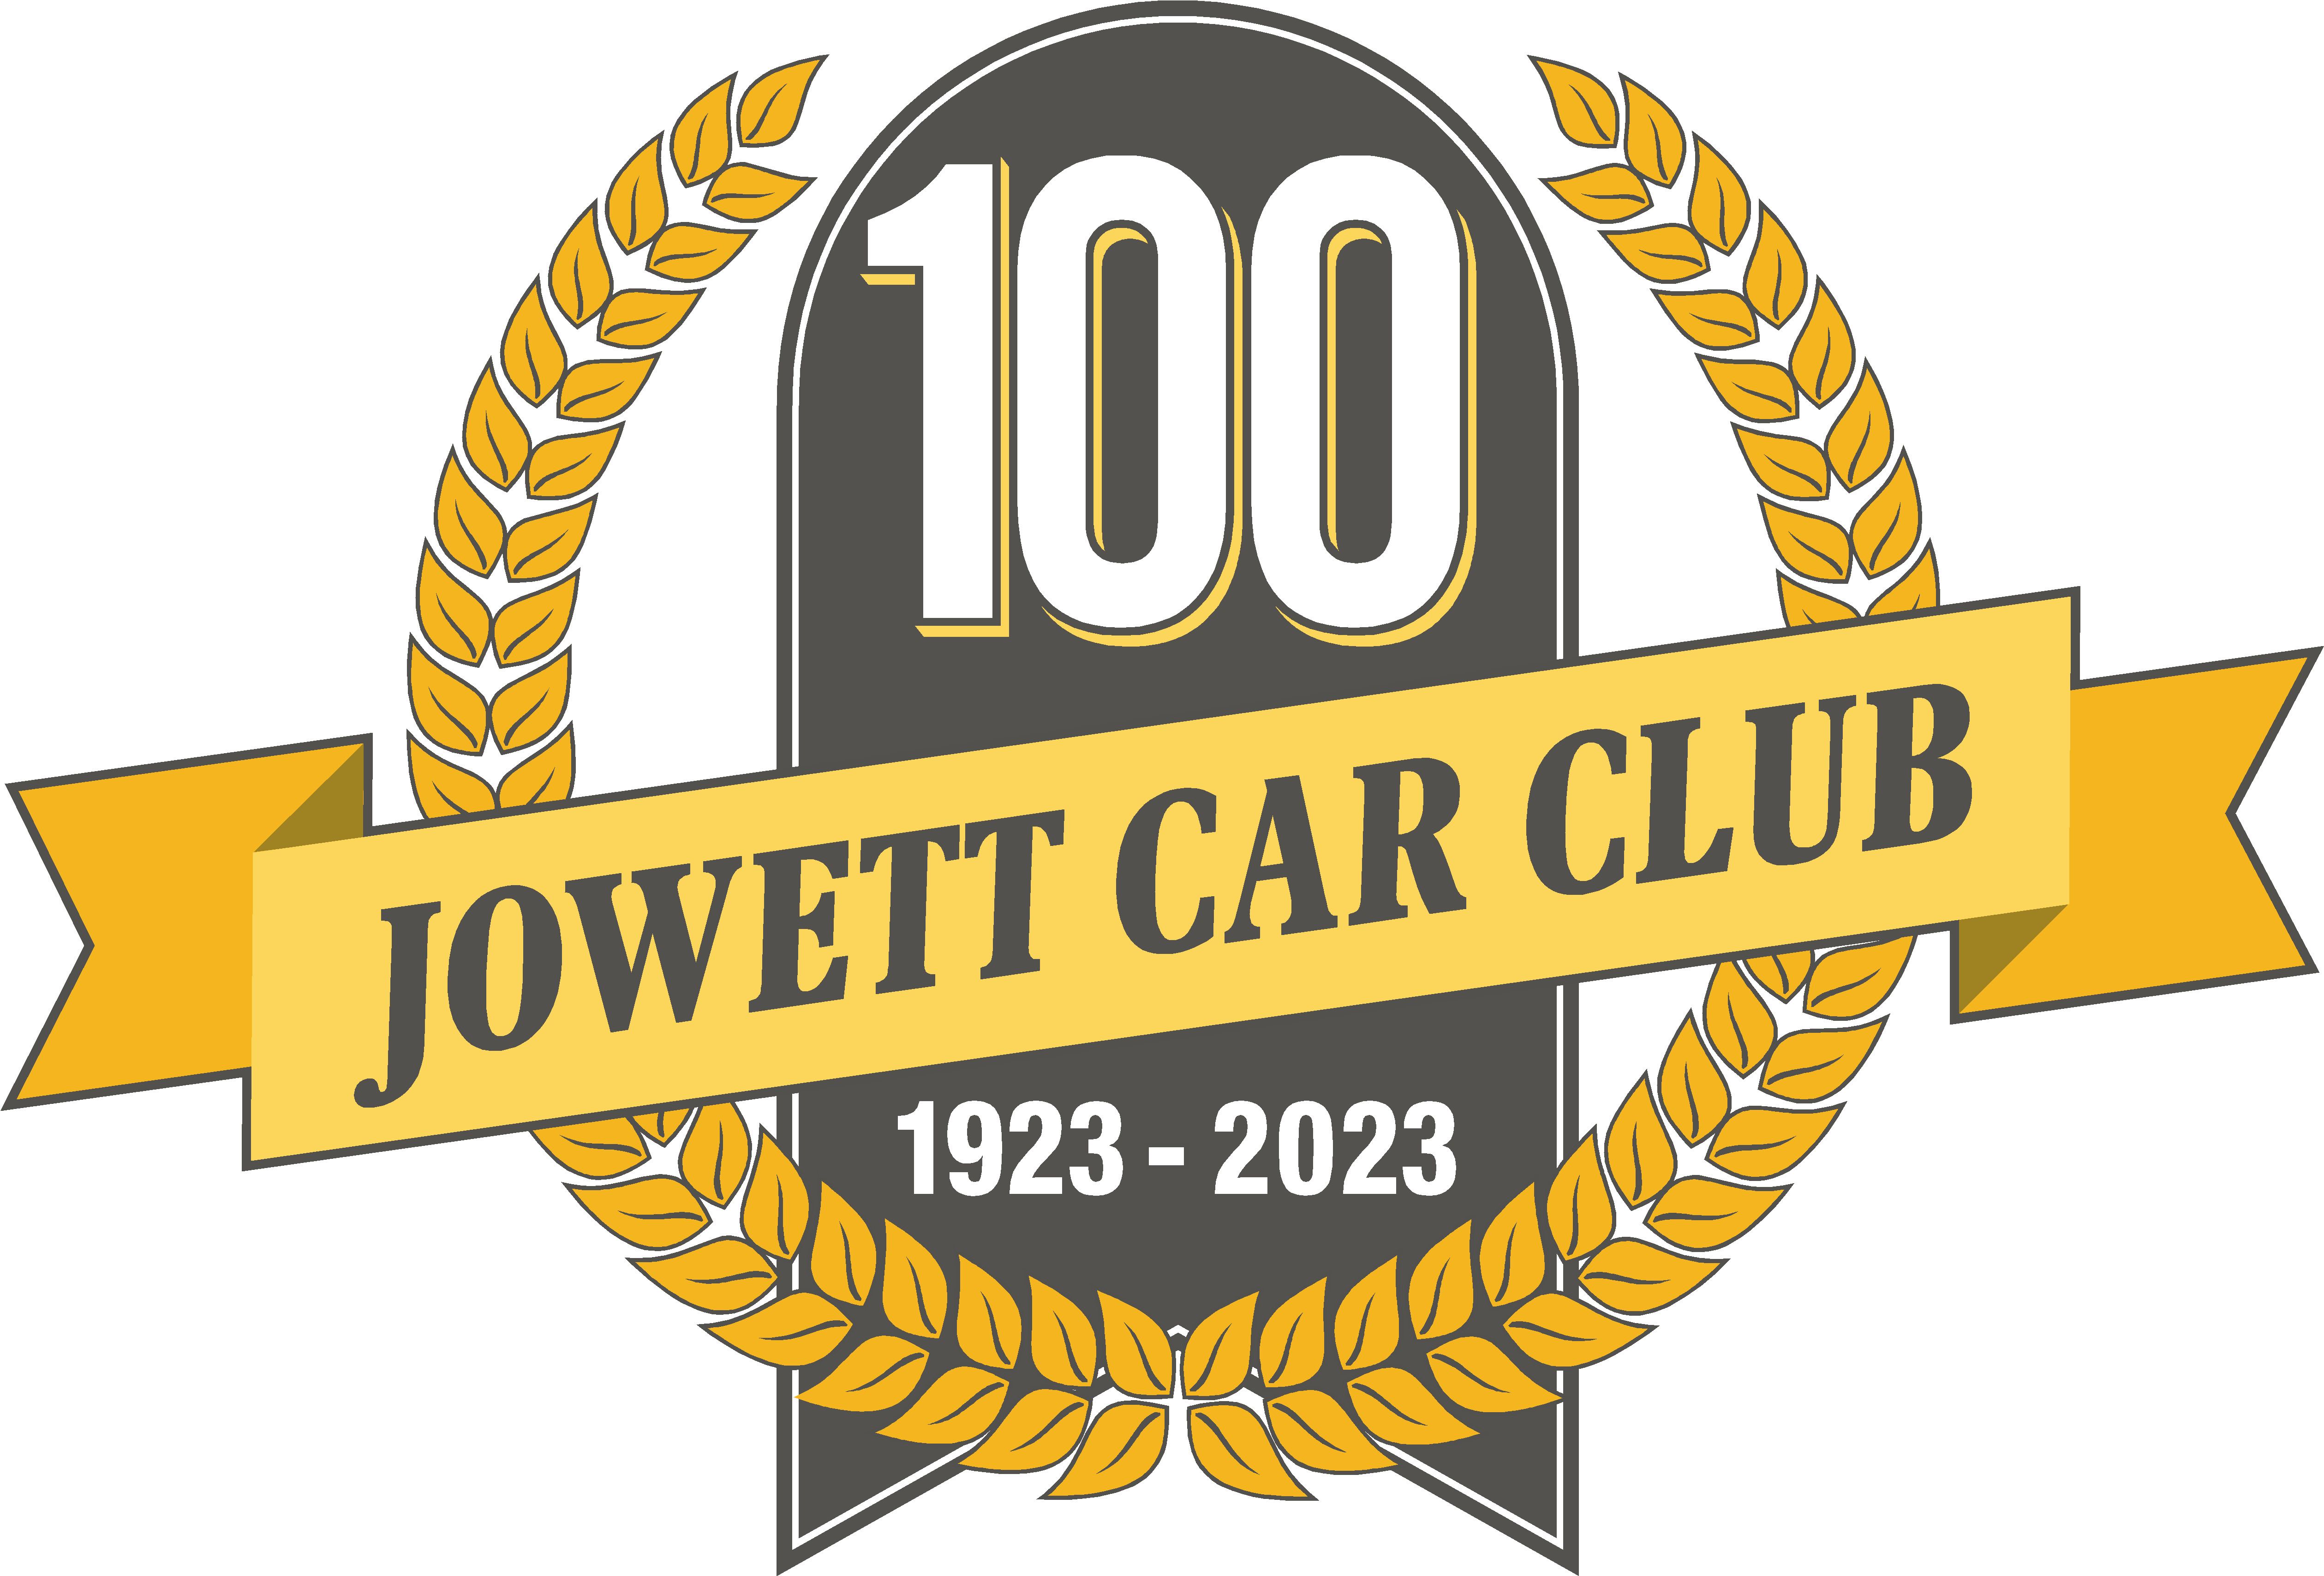 Jowett Car Club Centenary Stand